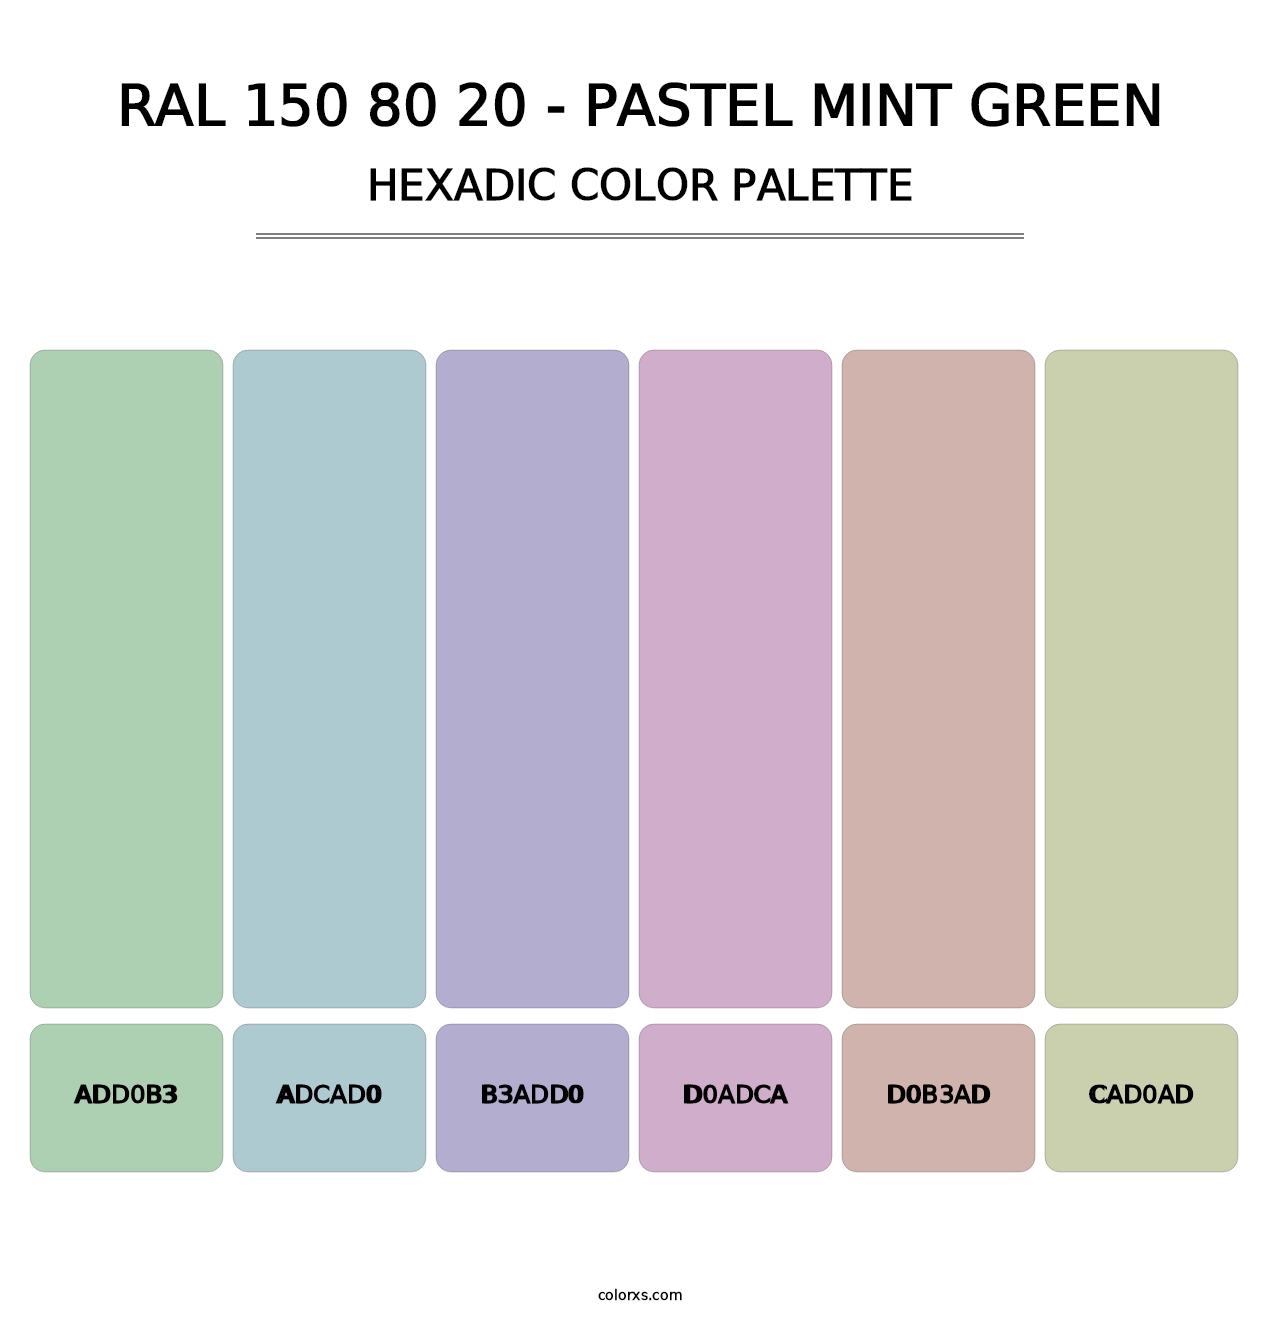 RAL 150 80 20 - Pastel Mint Green - Hexadic Color Palette